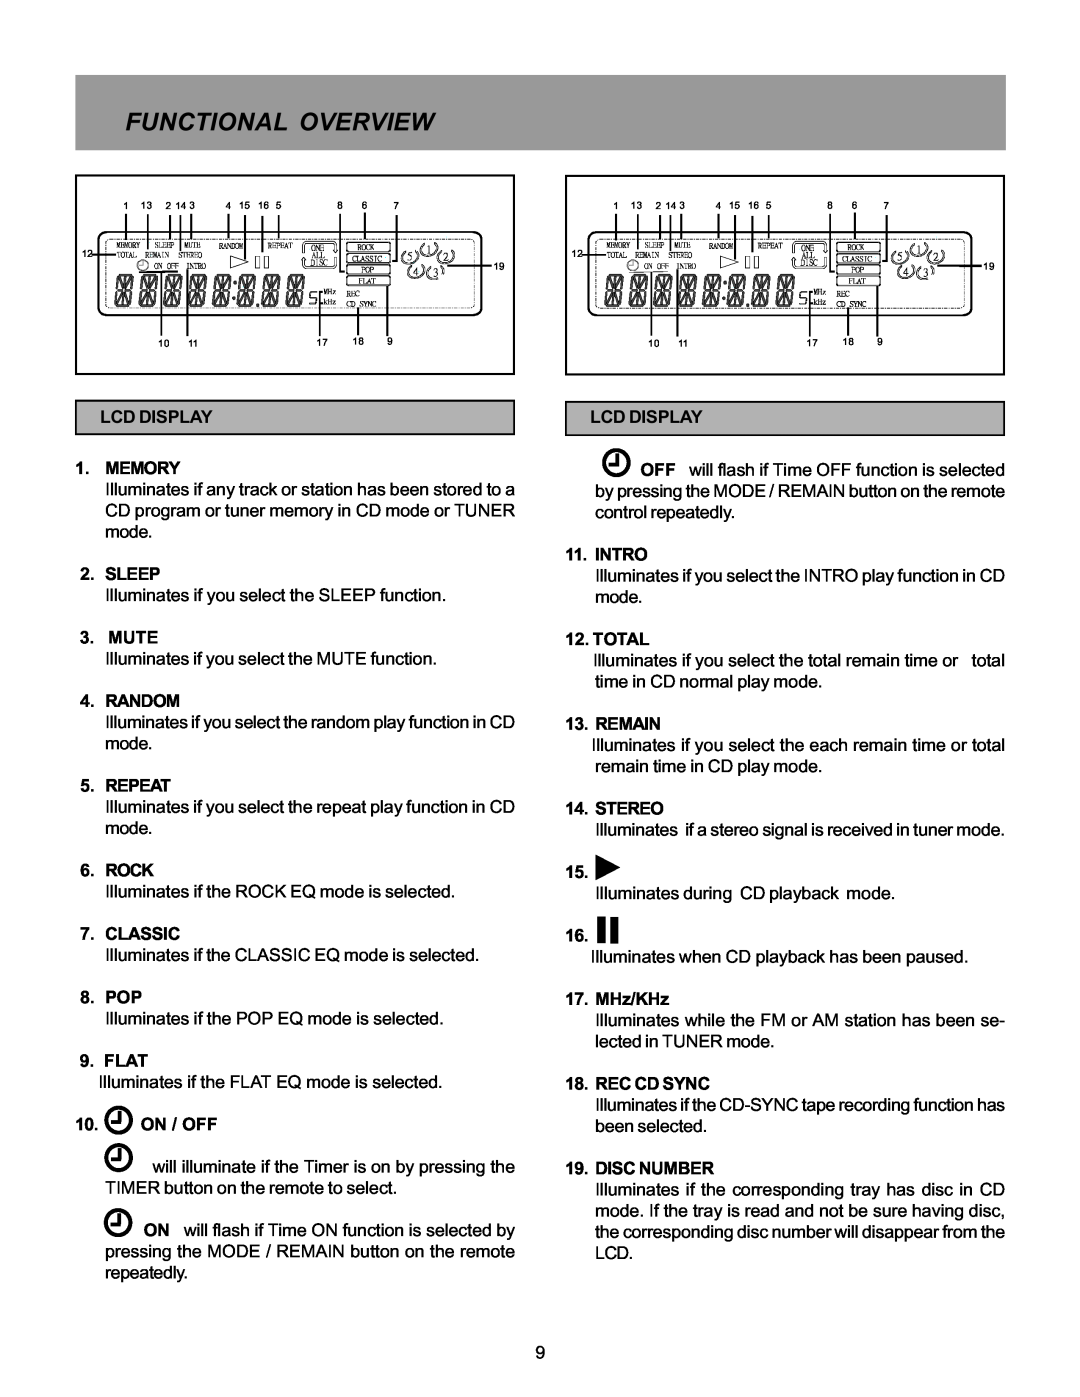 Memorex MX5520SPKA manual Functional Overview, LCD DISPLAY 1.MEMORY 